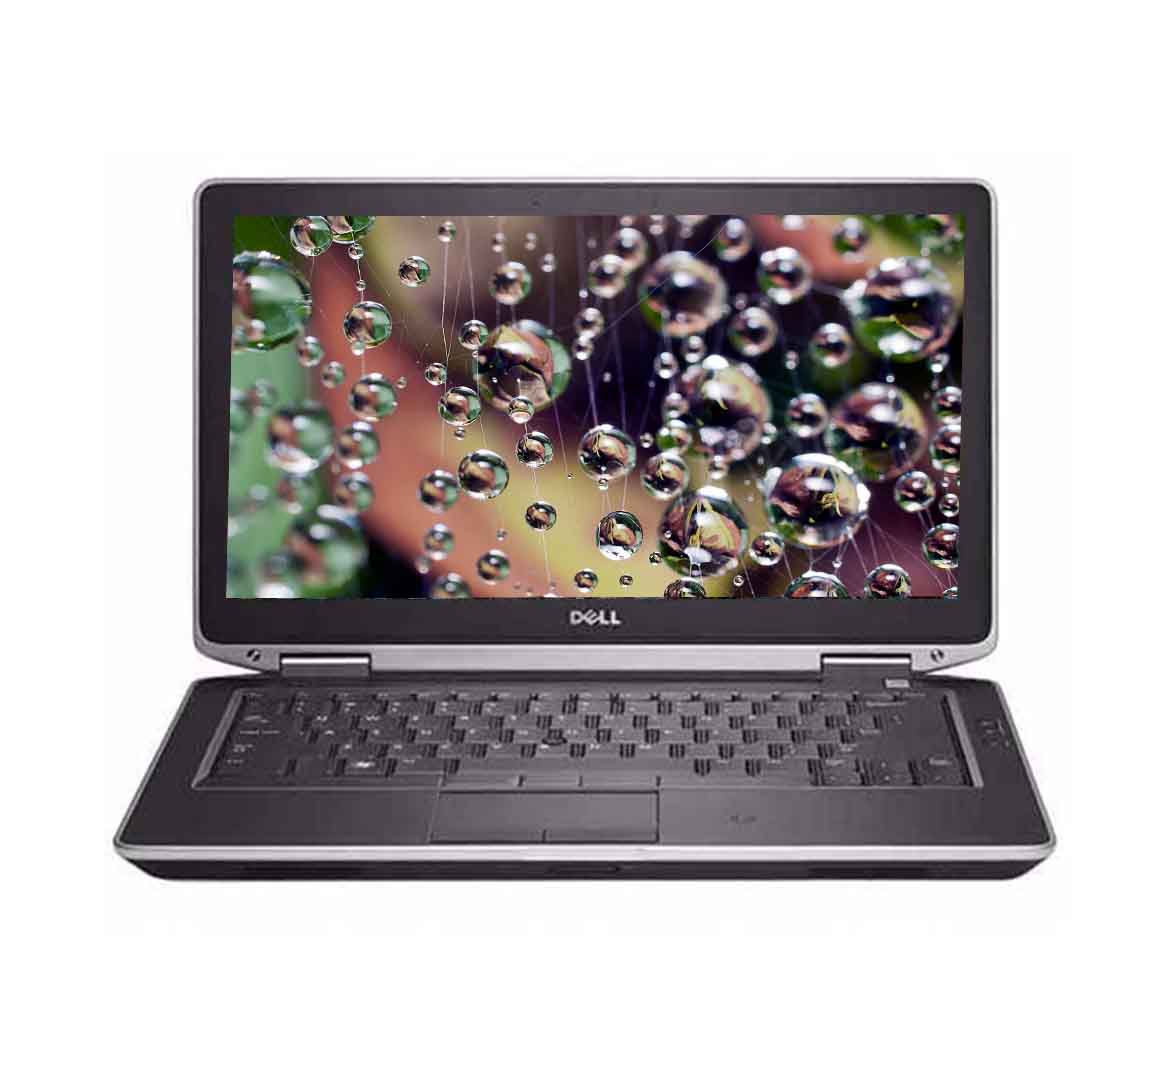 Dell Latitude E6330 Business Laptop, Intel Core i7-3rd Generation CPU, 8GB, 256GB SSD, 13.3 Inch Display, Windows 10 Pro, Refurbished Laptop